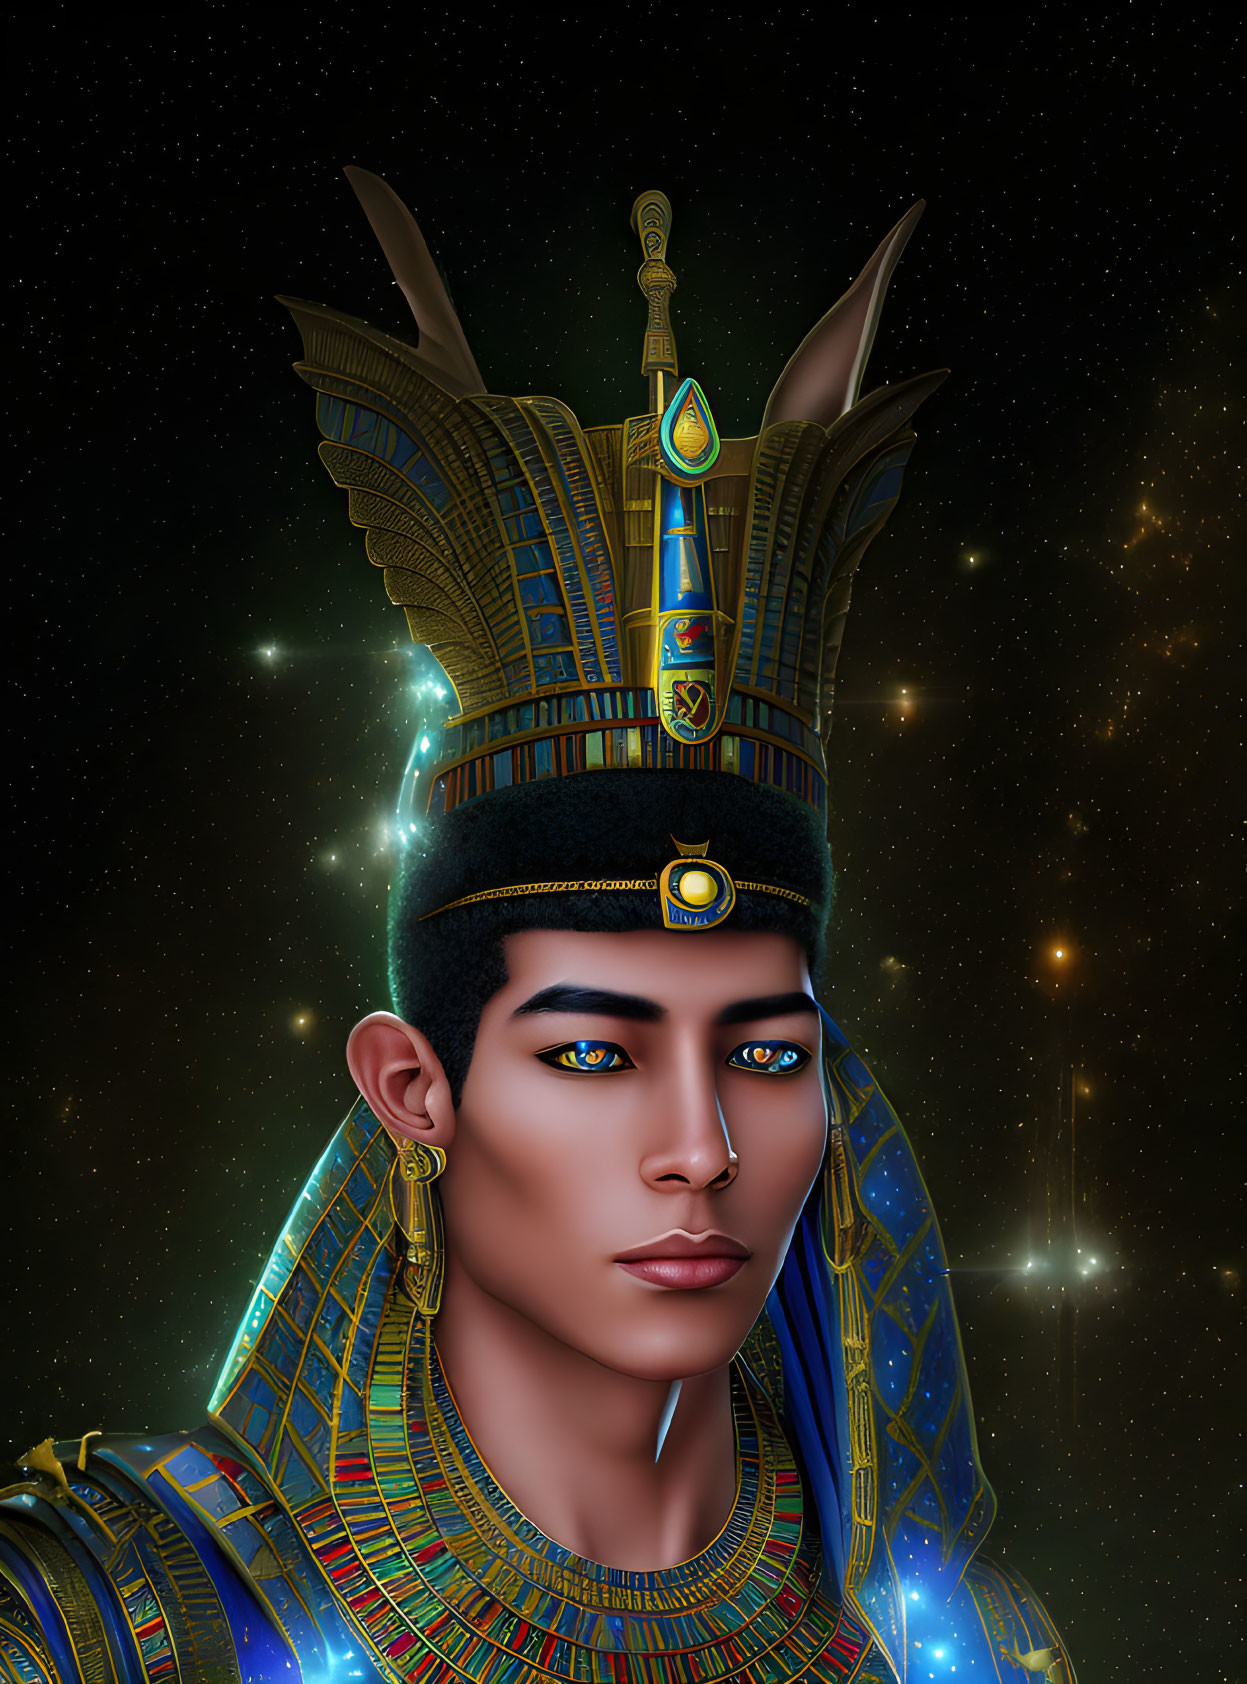 Digital portrait of a person in Egyptian pharaoh headdress against star-lit backdrop